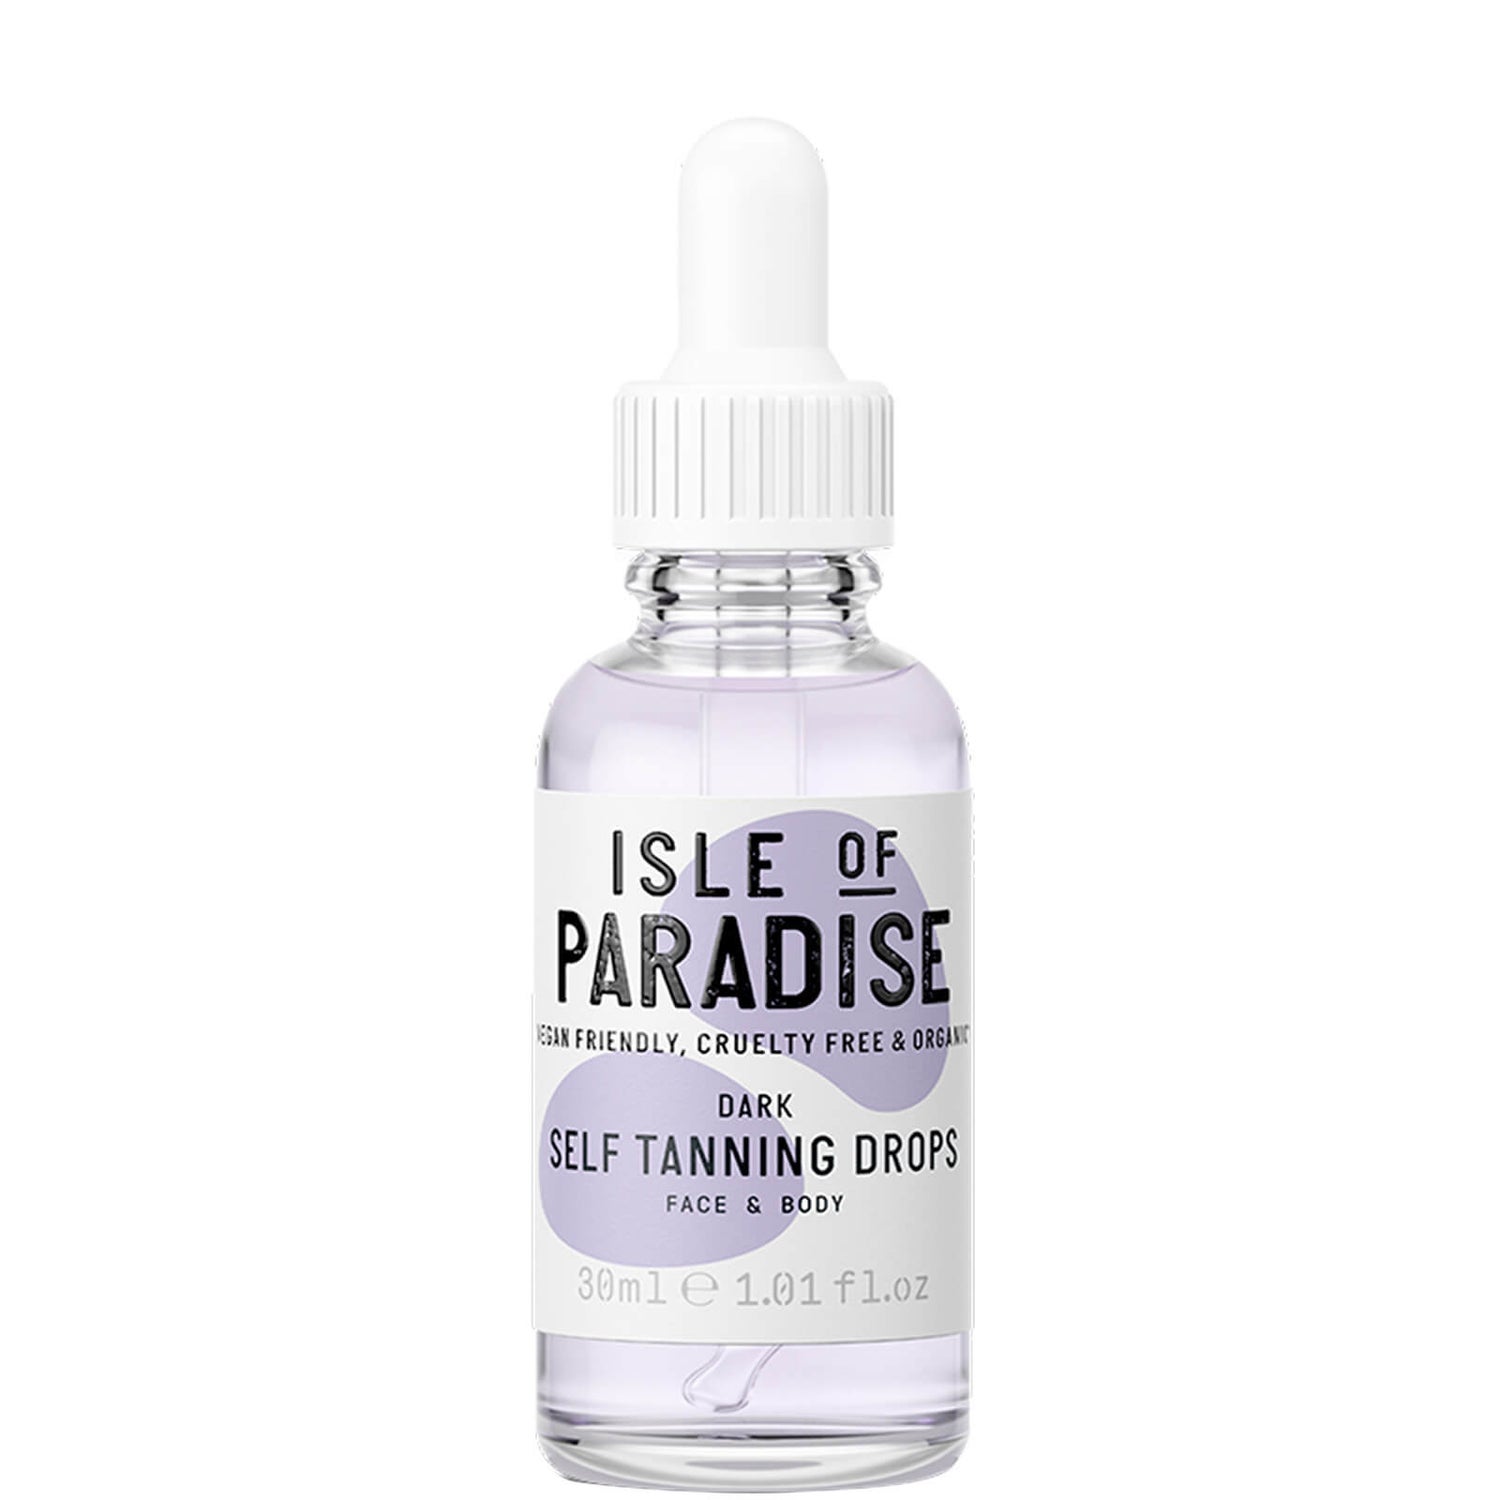 Isle of Paradise Self-Tanning Drops – Dark 30 ml